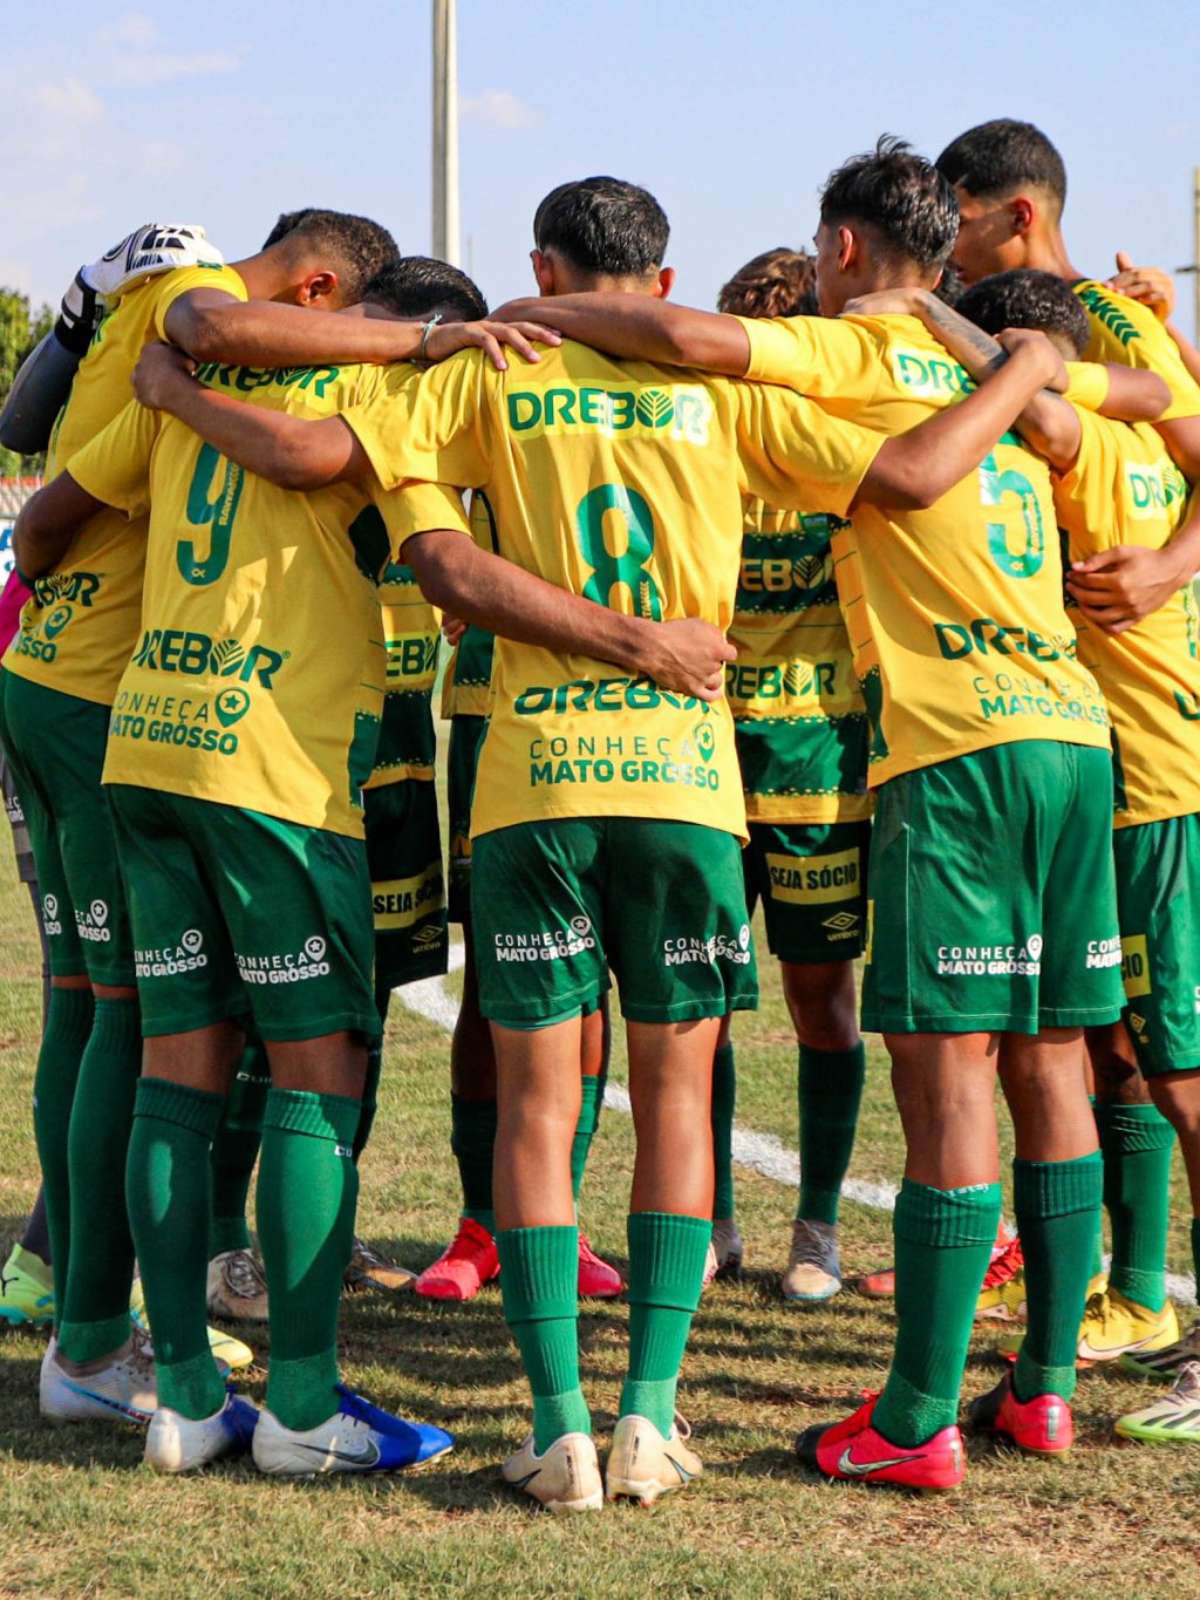 Atleta de Sorriso representará Mato Grosso na Copa Brasil de Futevôlei